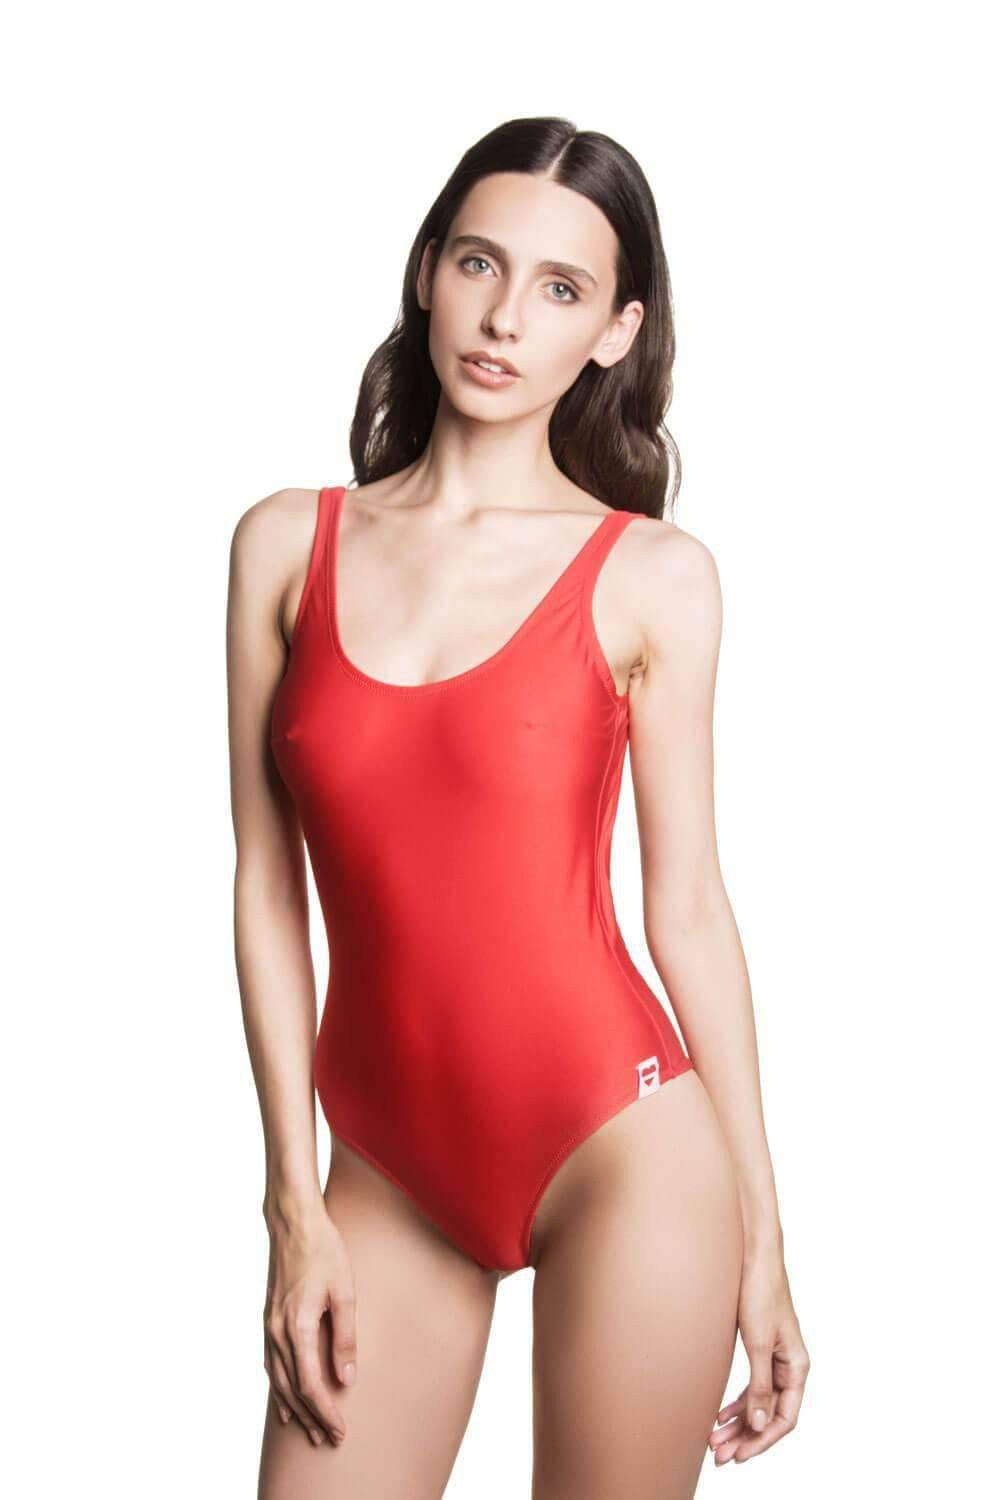 Malibu Hot Red swimsuit - One Piece swimsuit by Love Jilty. Shop on yesUndress